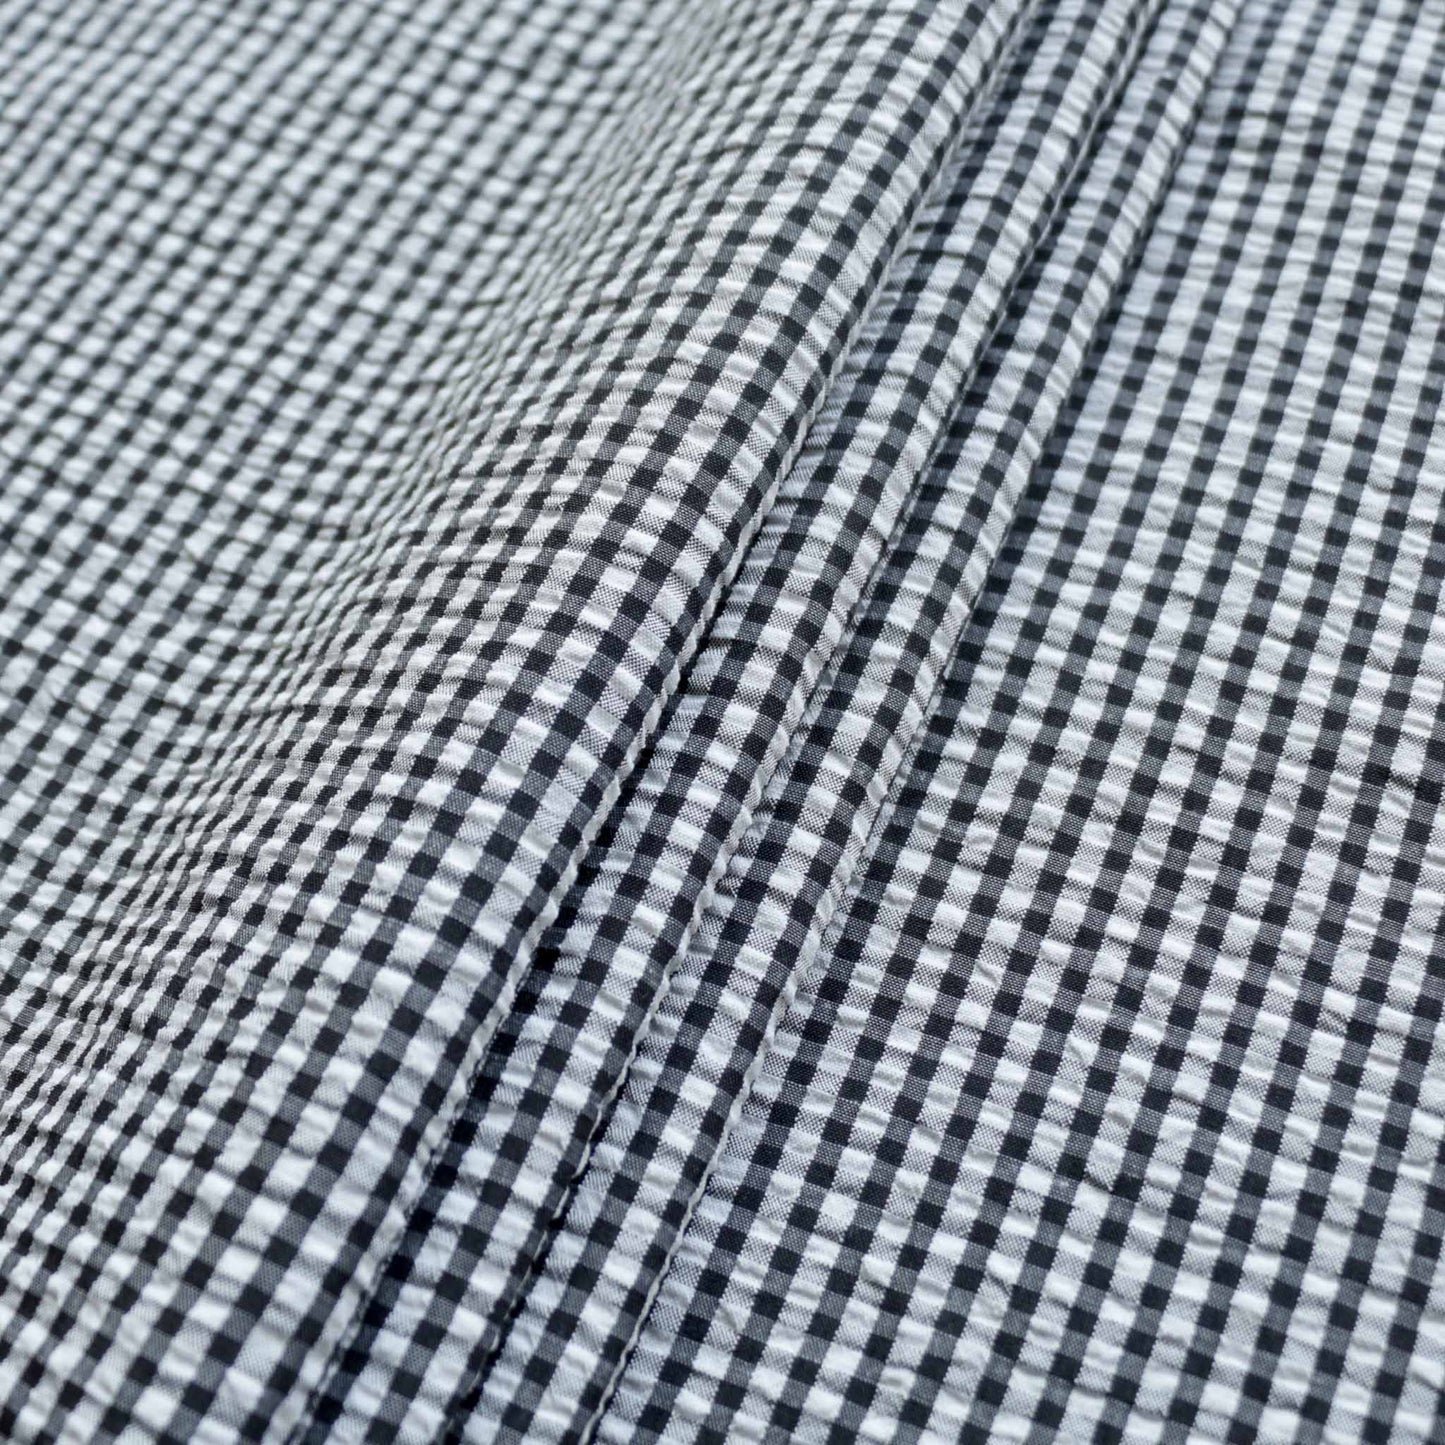 black and white folded seersucker dressmaking fabric in gingham print